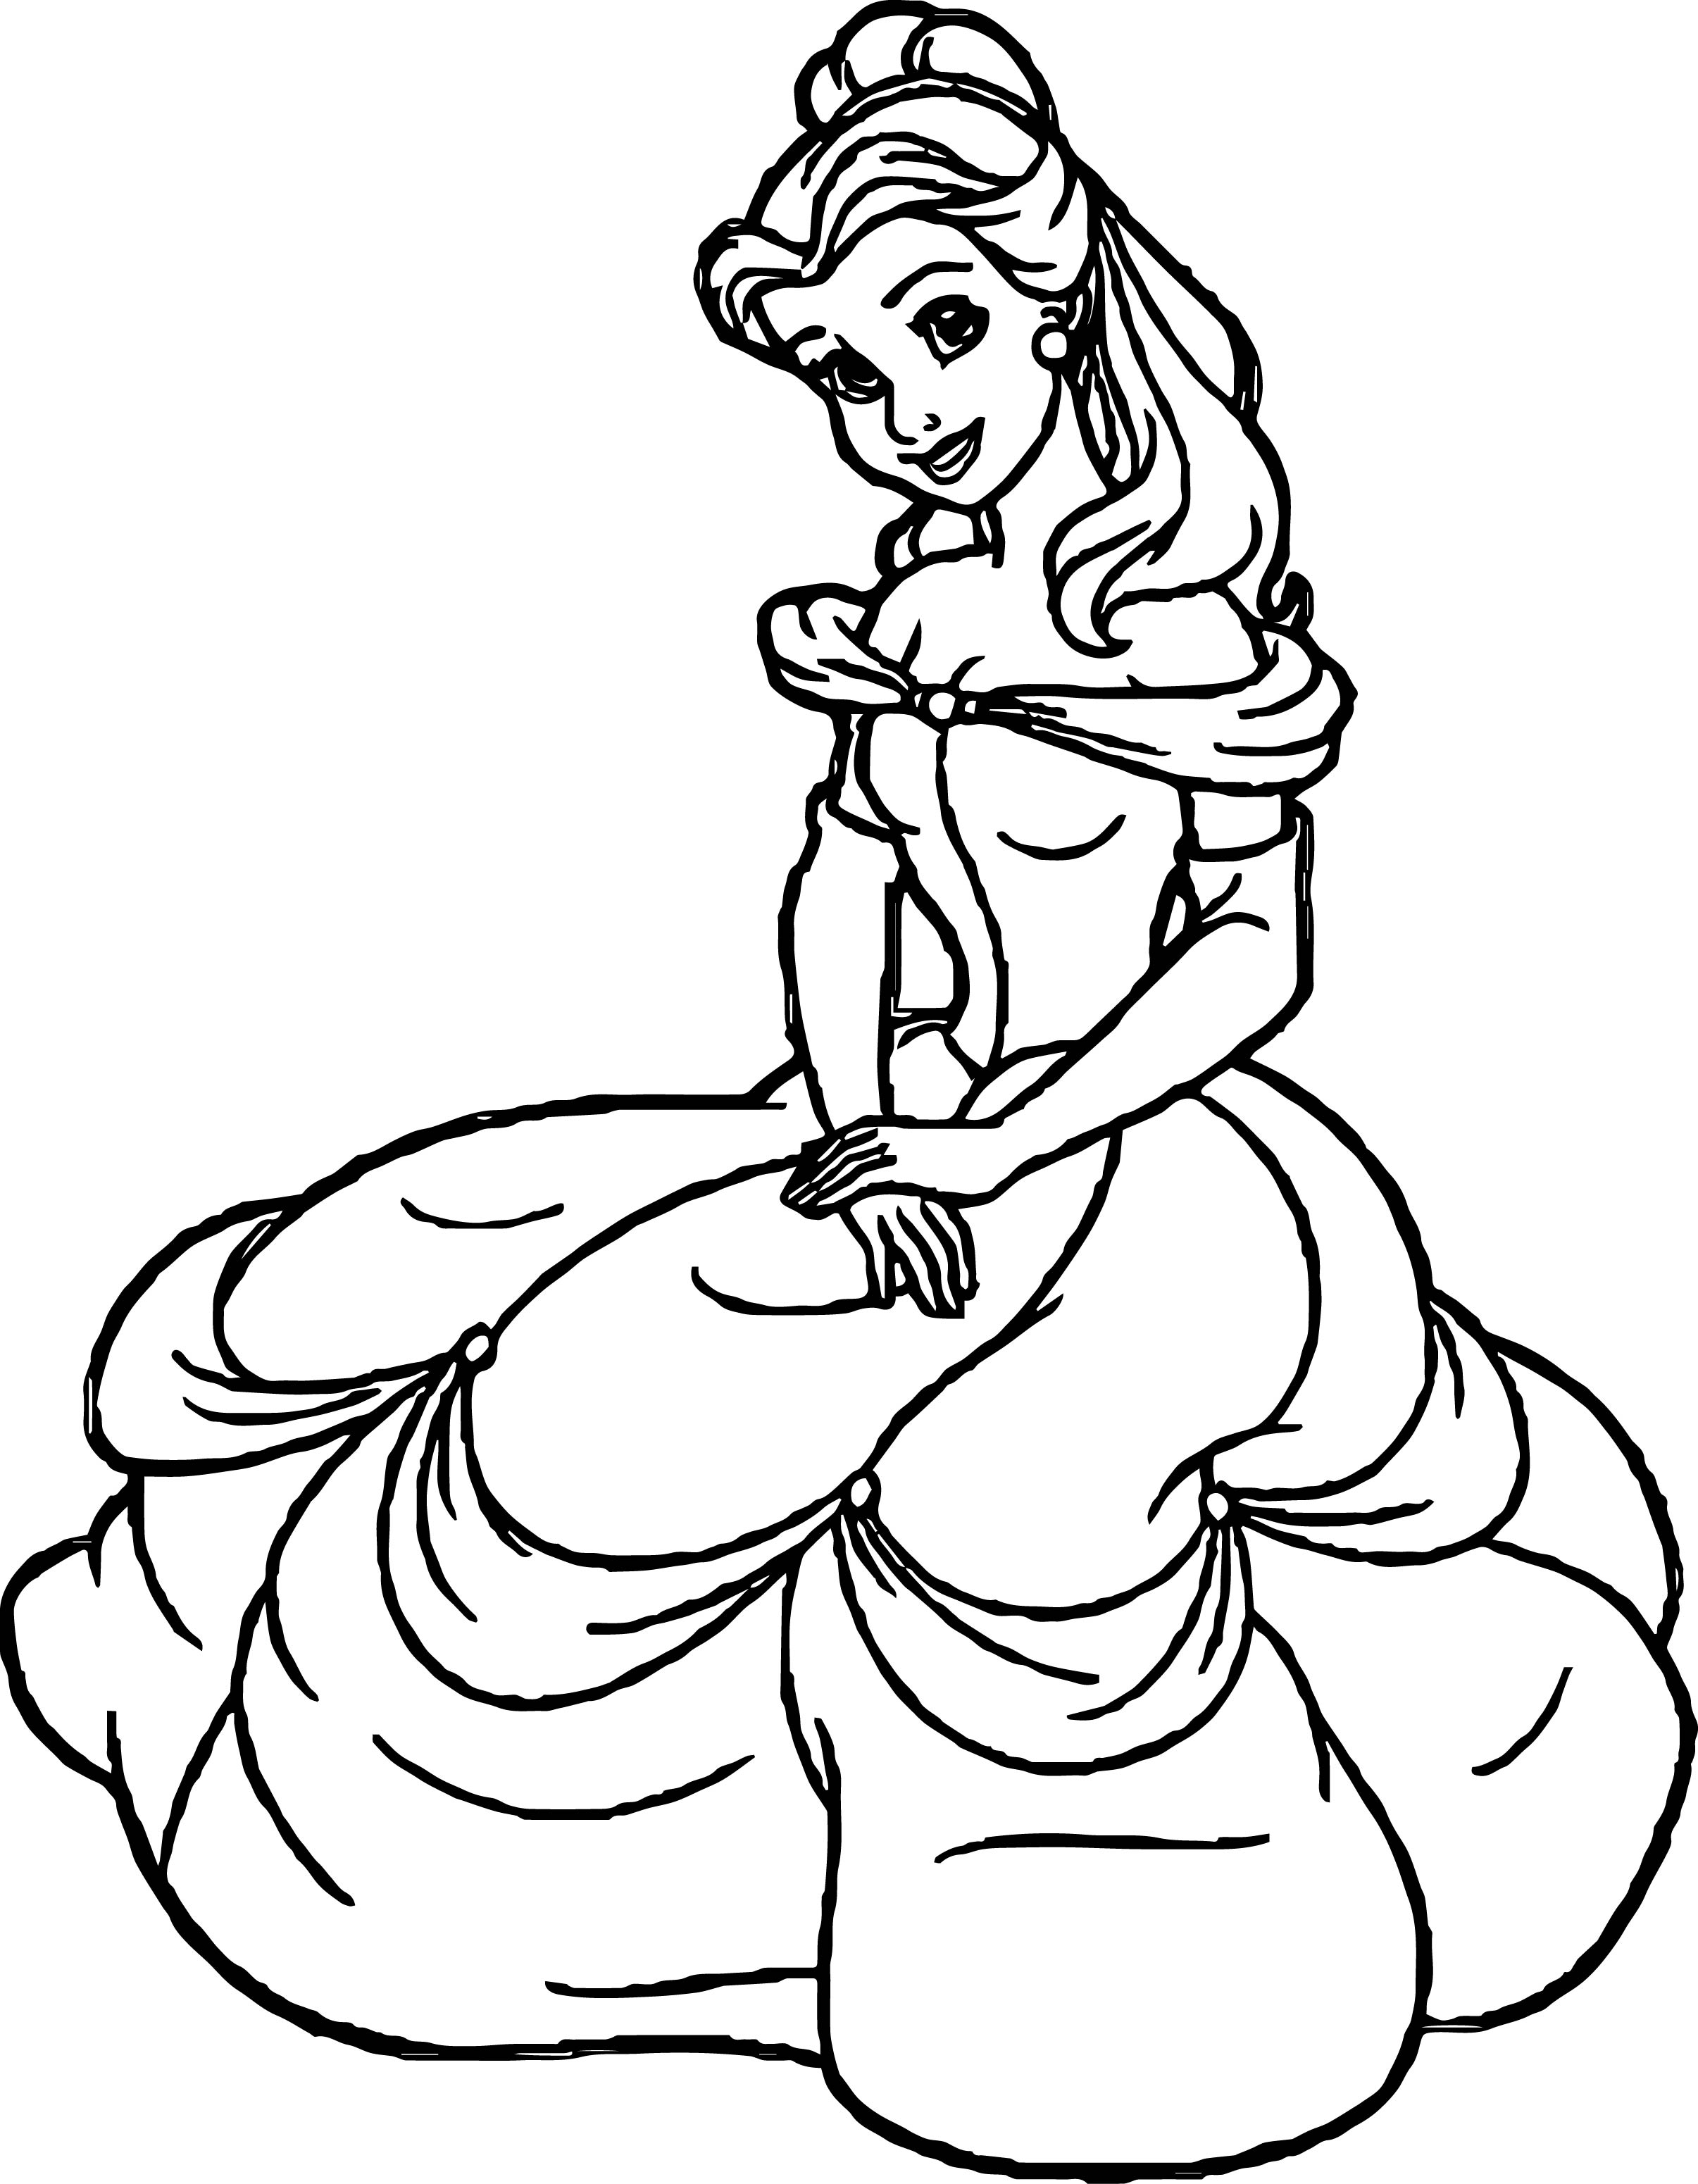 Free Printable Disney Princess Coloring Pages at GetDrawings | Free